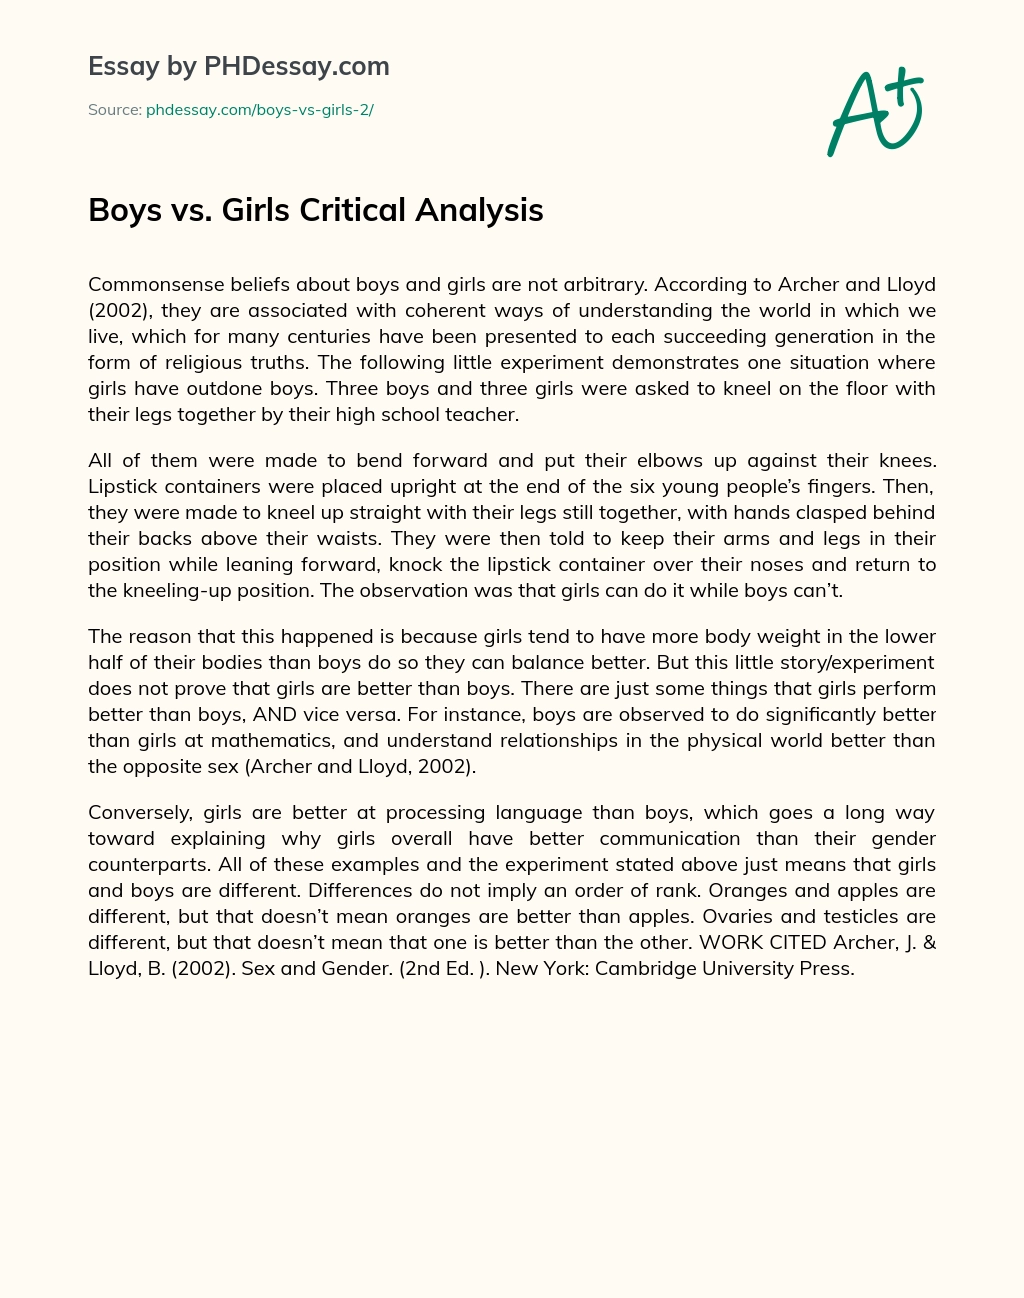 Boys vs. Girls Critical Analysis essay